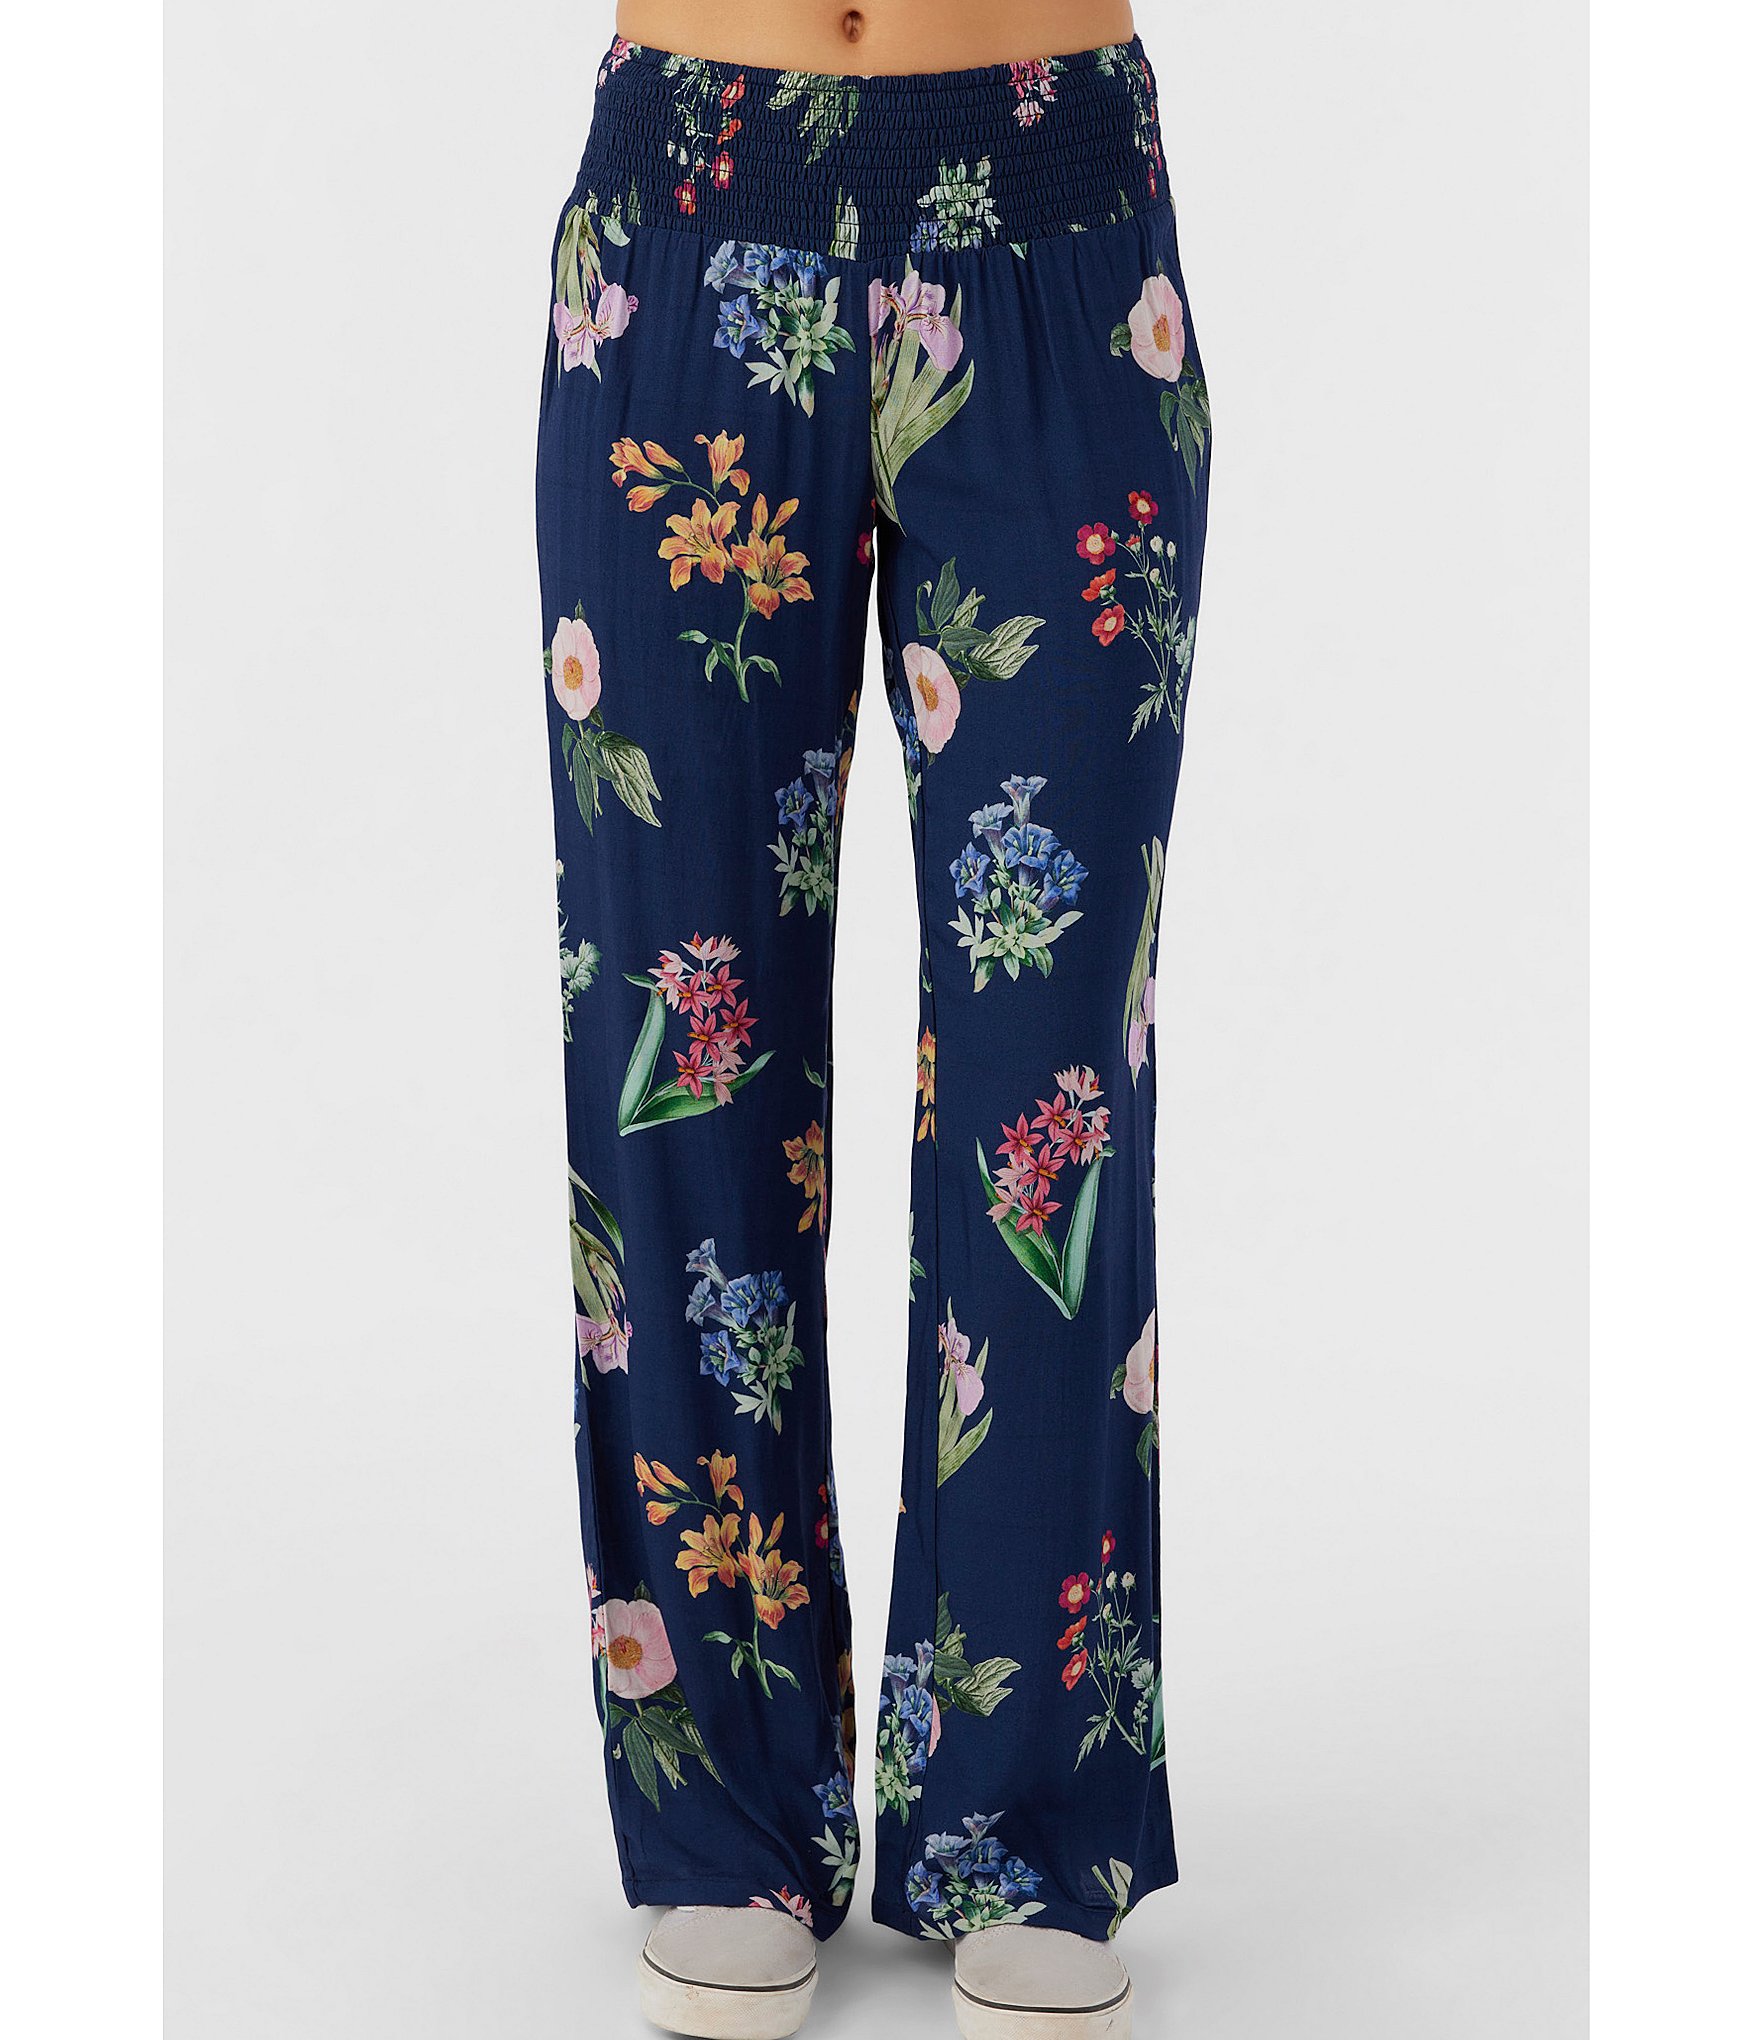 GrandBloom Floral Print Knit Straight Leg Pants ( Part of Set S